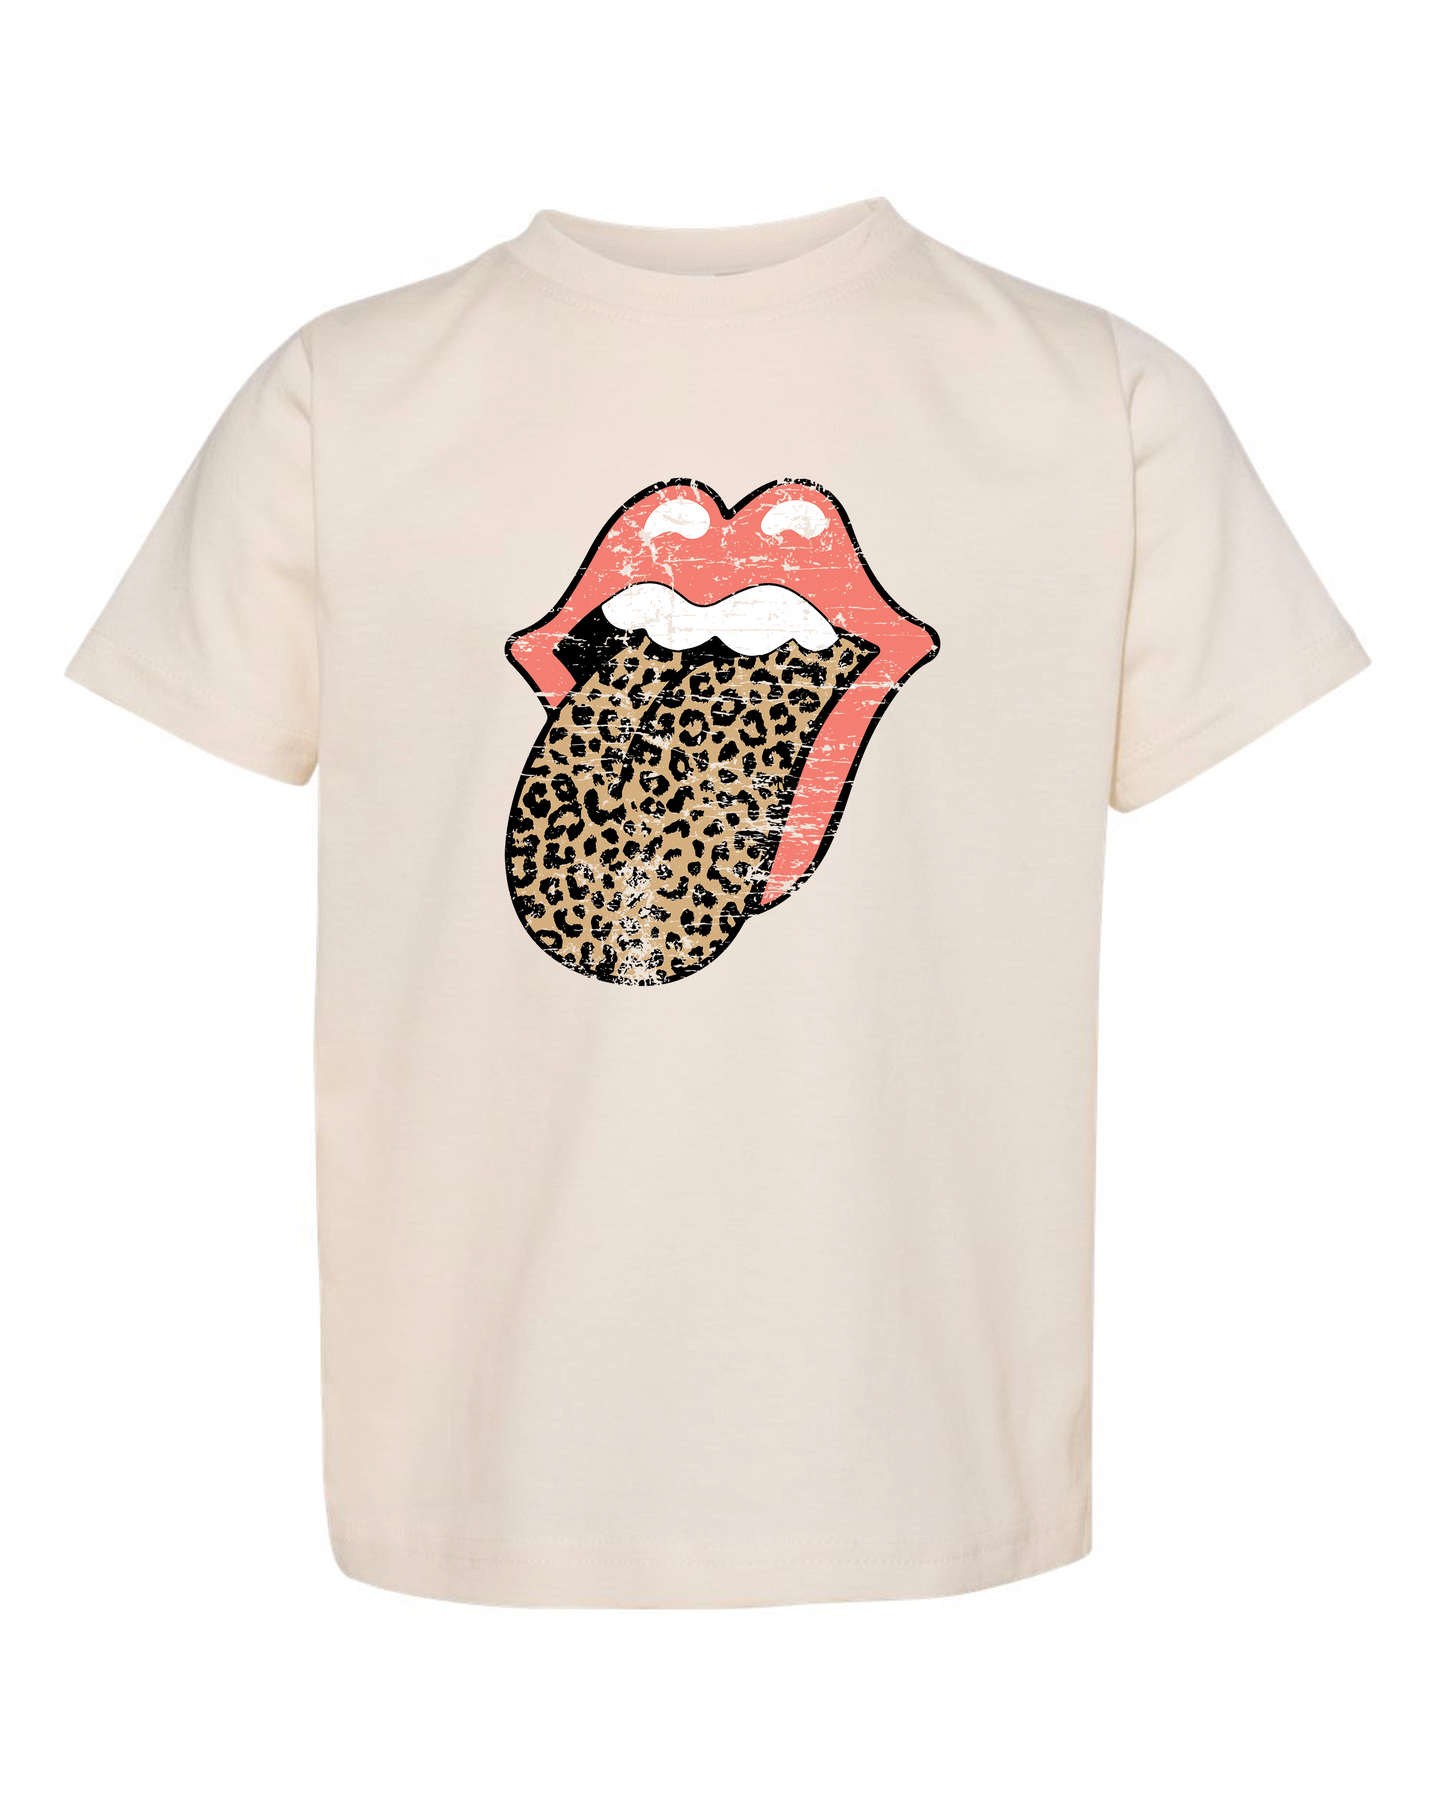 Cheetah Lips | Tee | Kids-Kids Tees-Sister Shirts-Sister Shirts, Cute & Custom Tees for Mama & Littles in Trussville, Alabama.